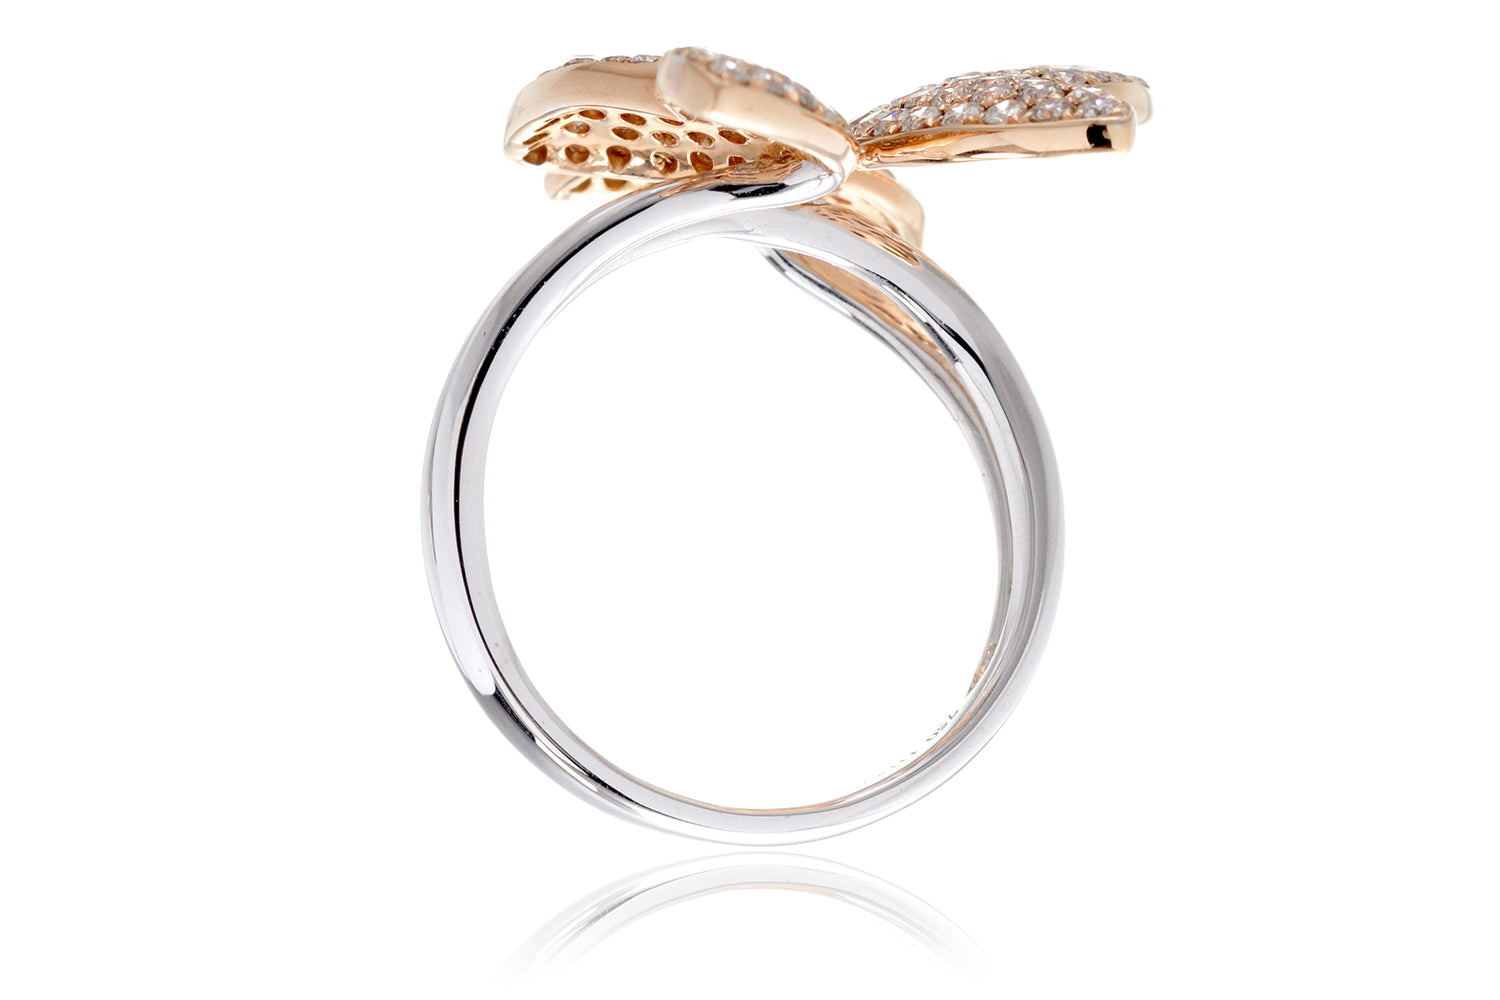 The Pavé Diamond Butterfly Ring